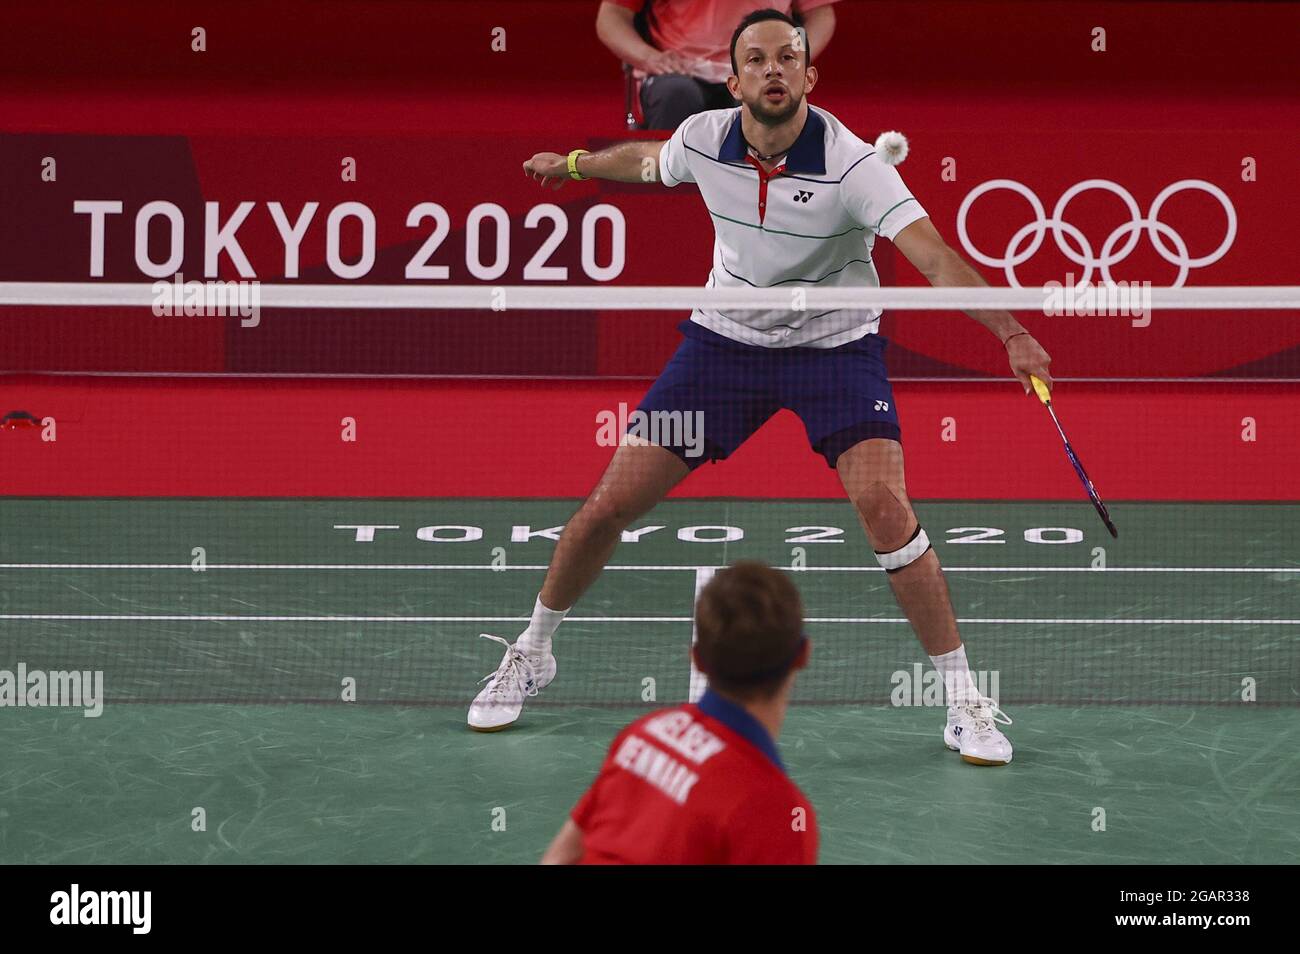 K. cordón olympic games tokyo 2020